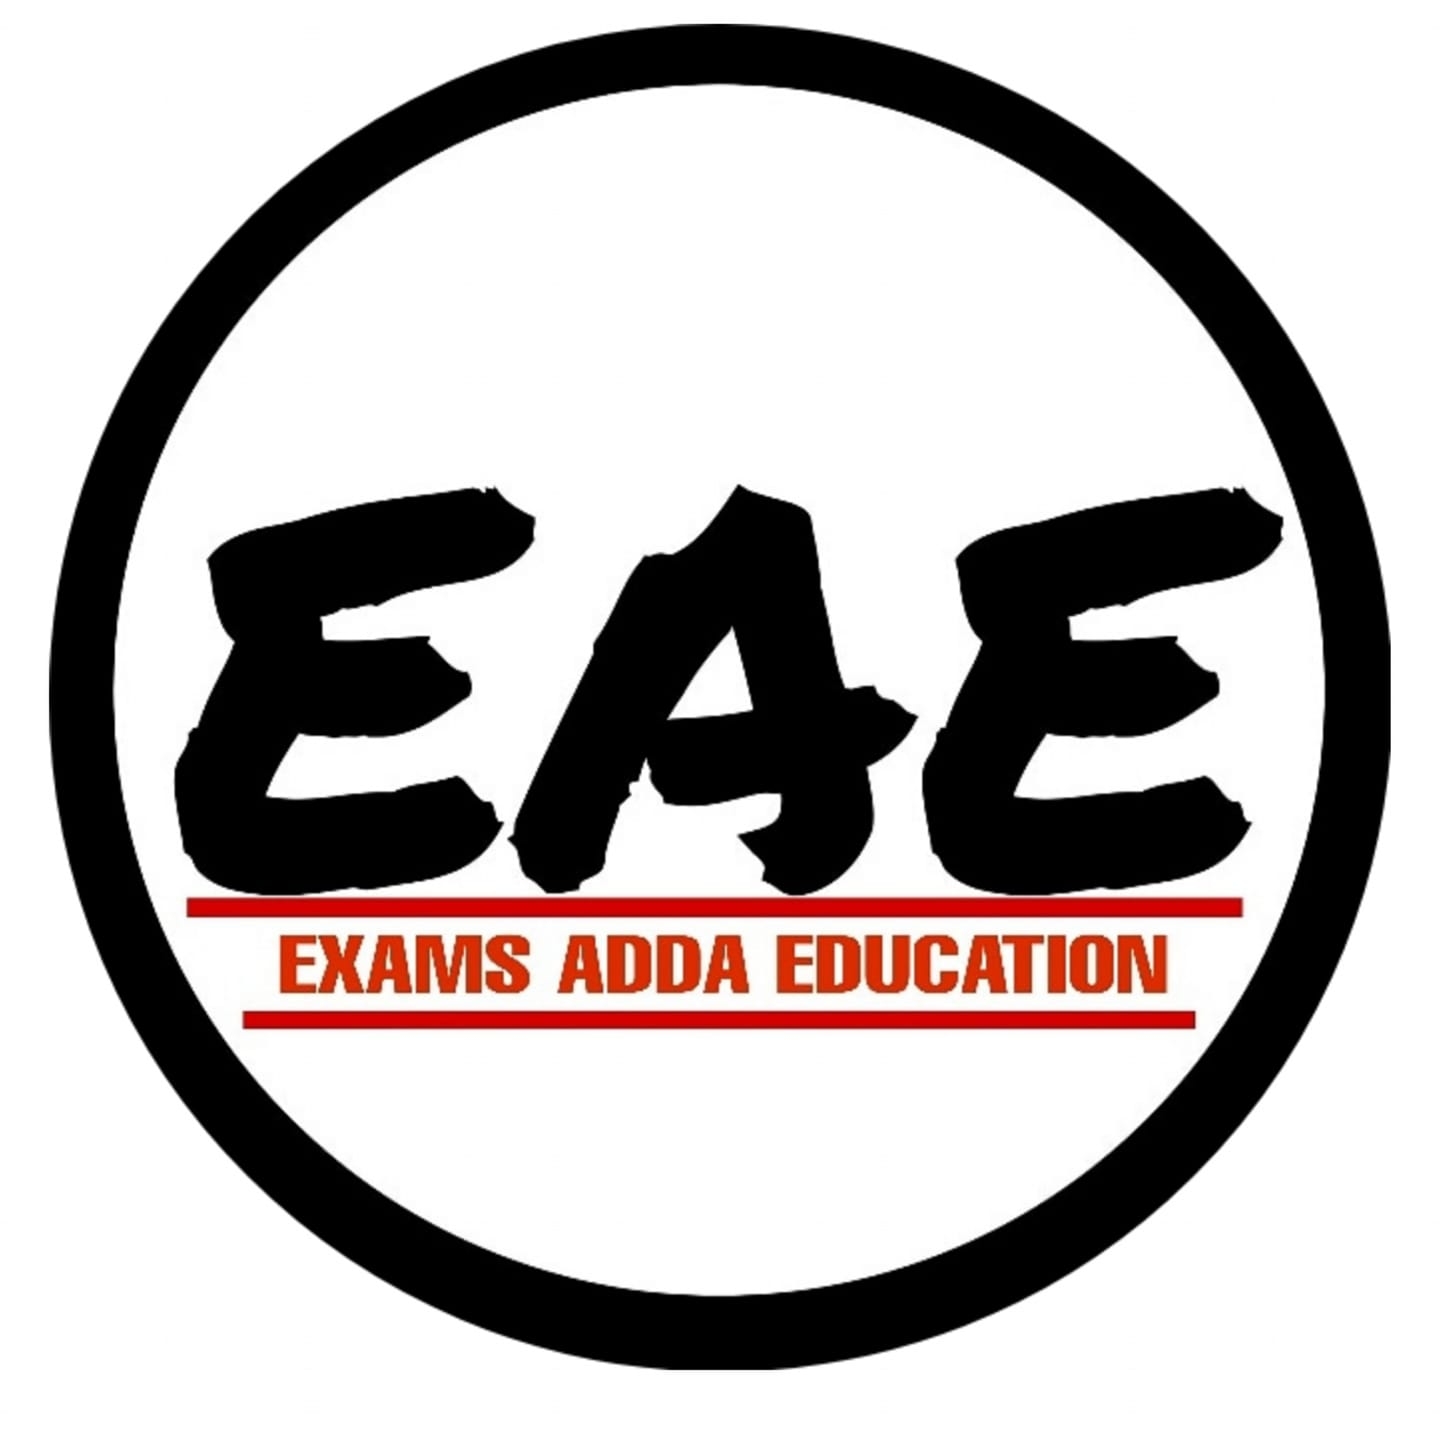 Exams Adda Education